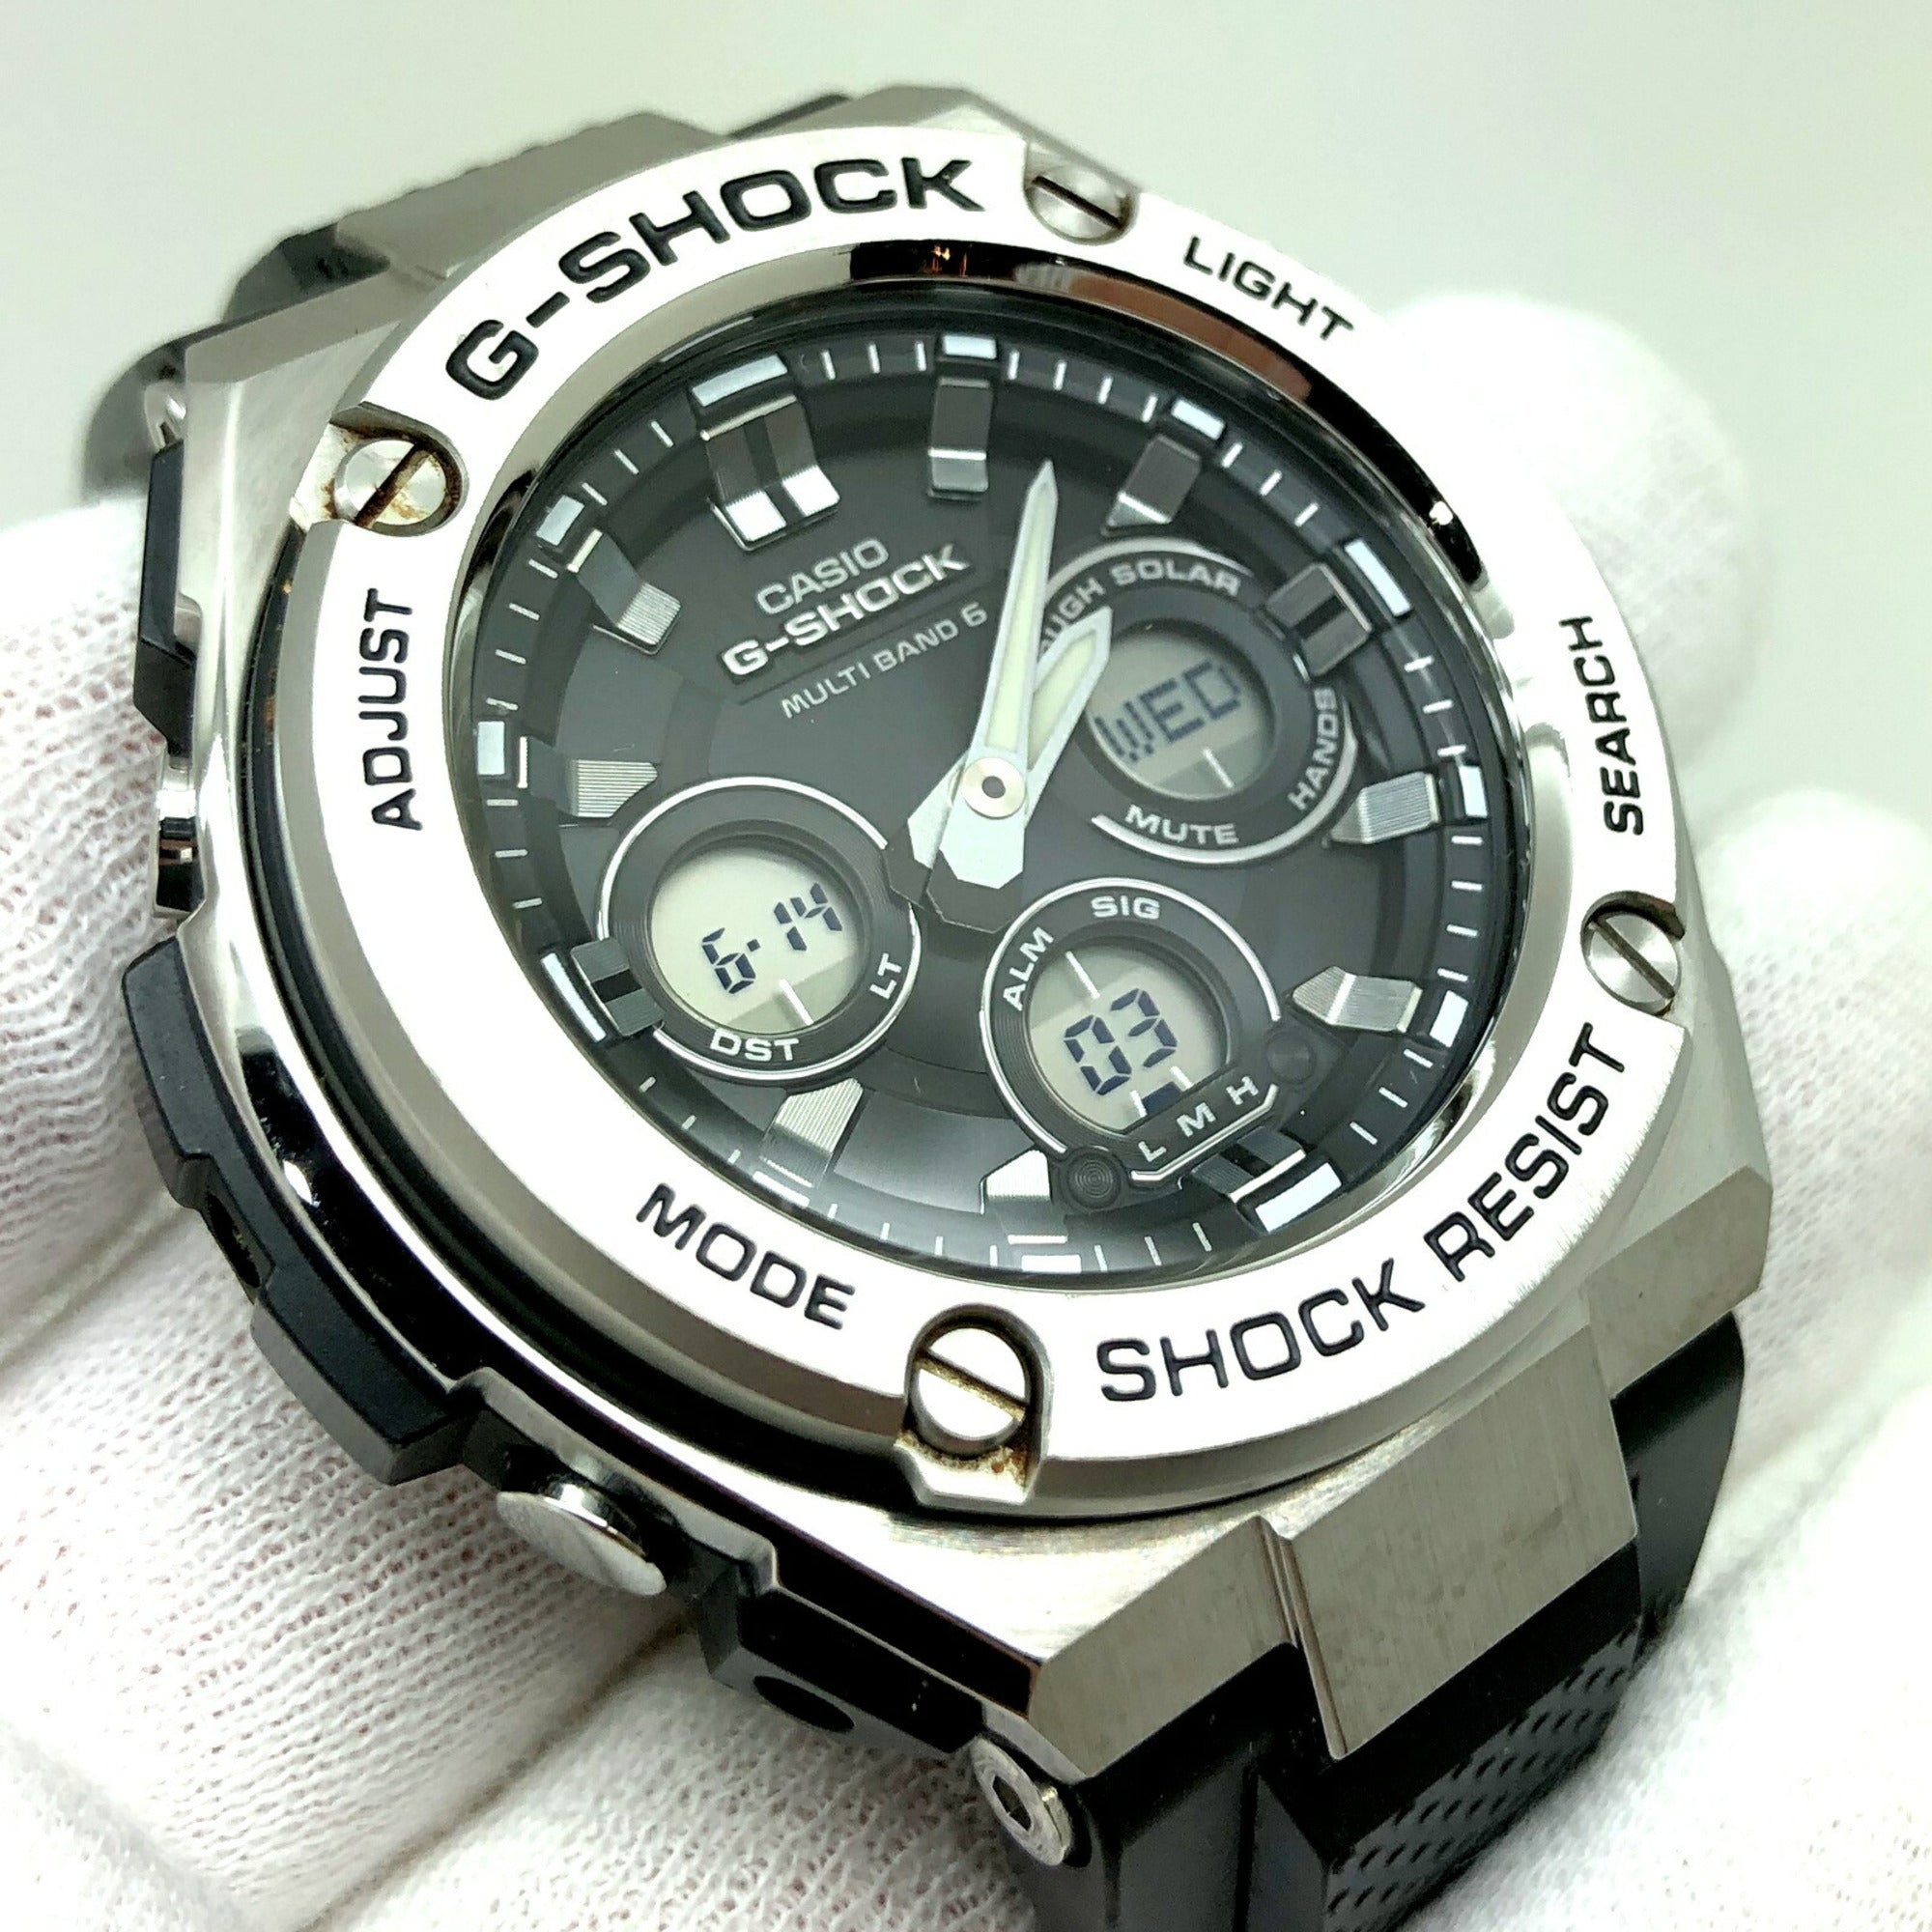 CASIOG-SHOCK watch GST-W310-1A G-STEEL G steel analog-digital radio wa